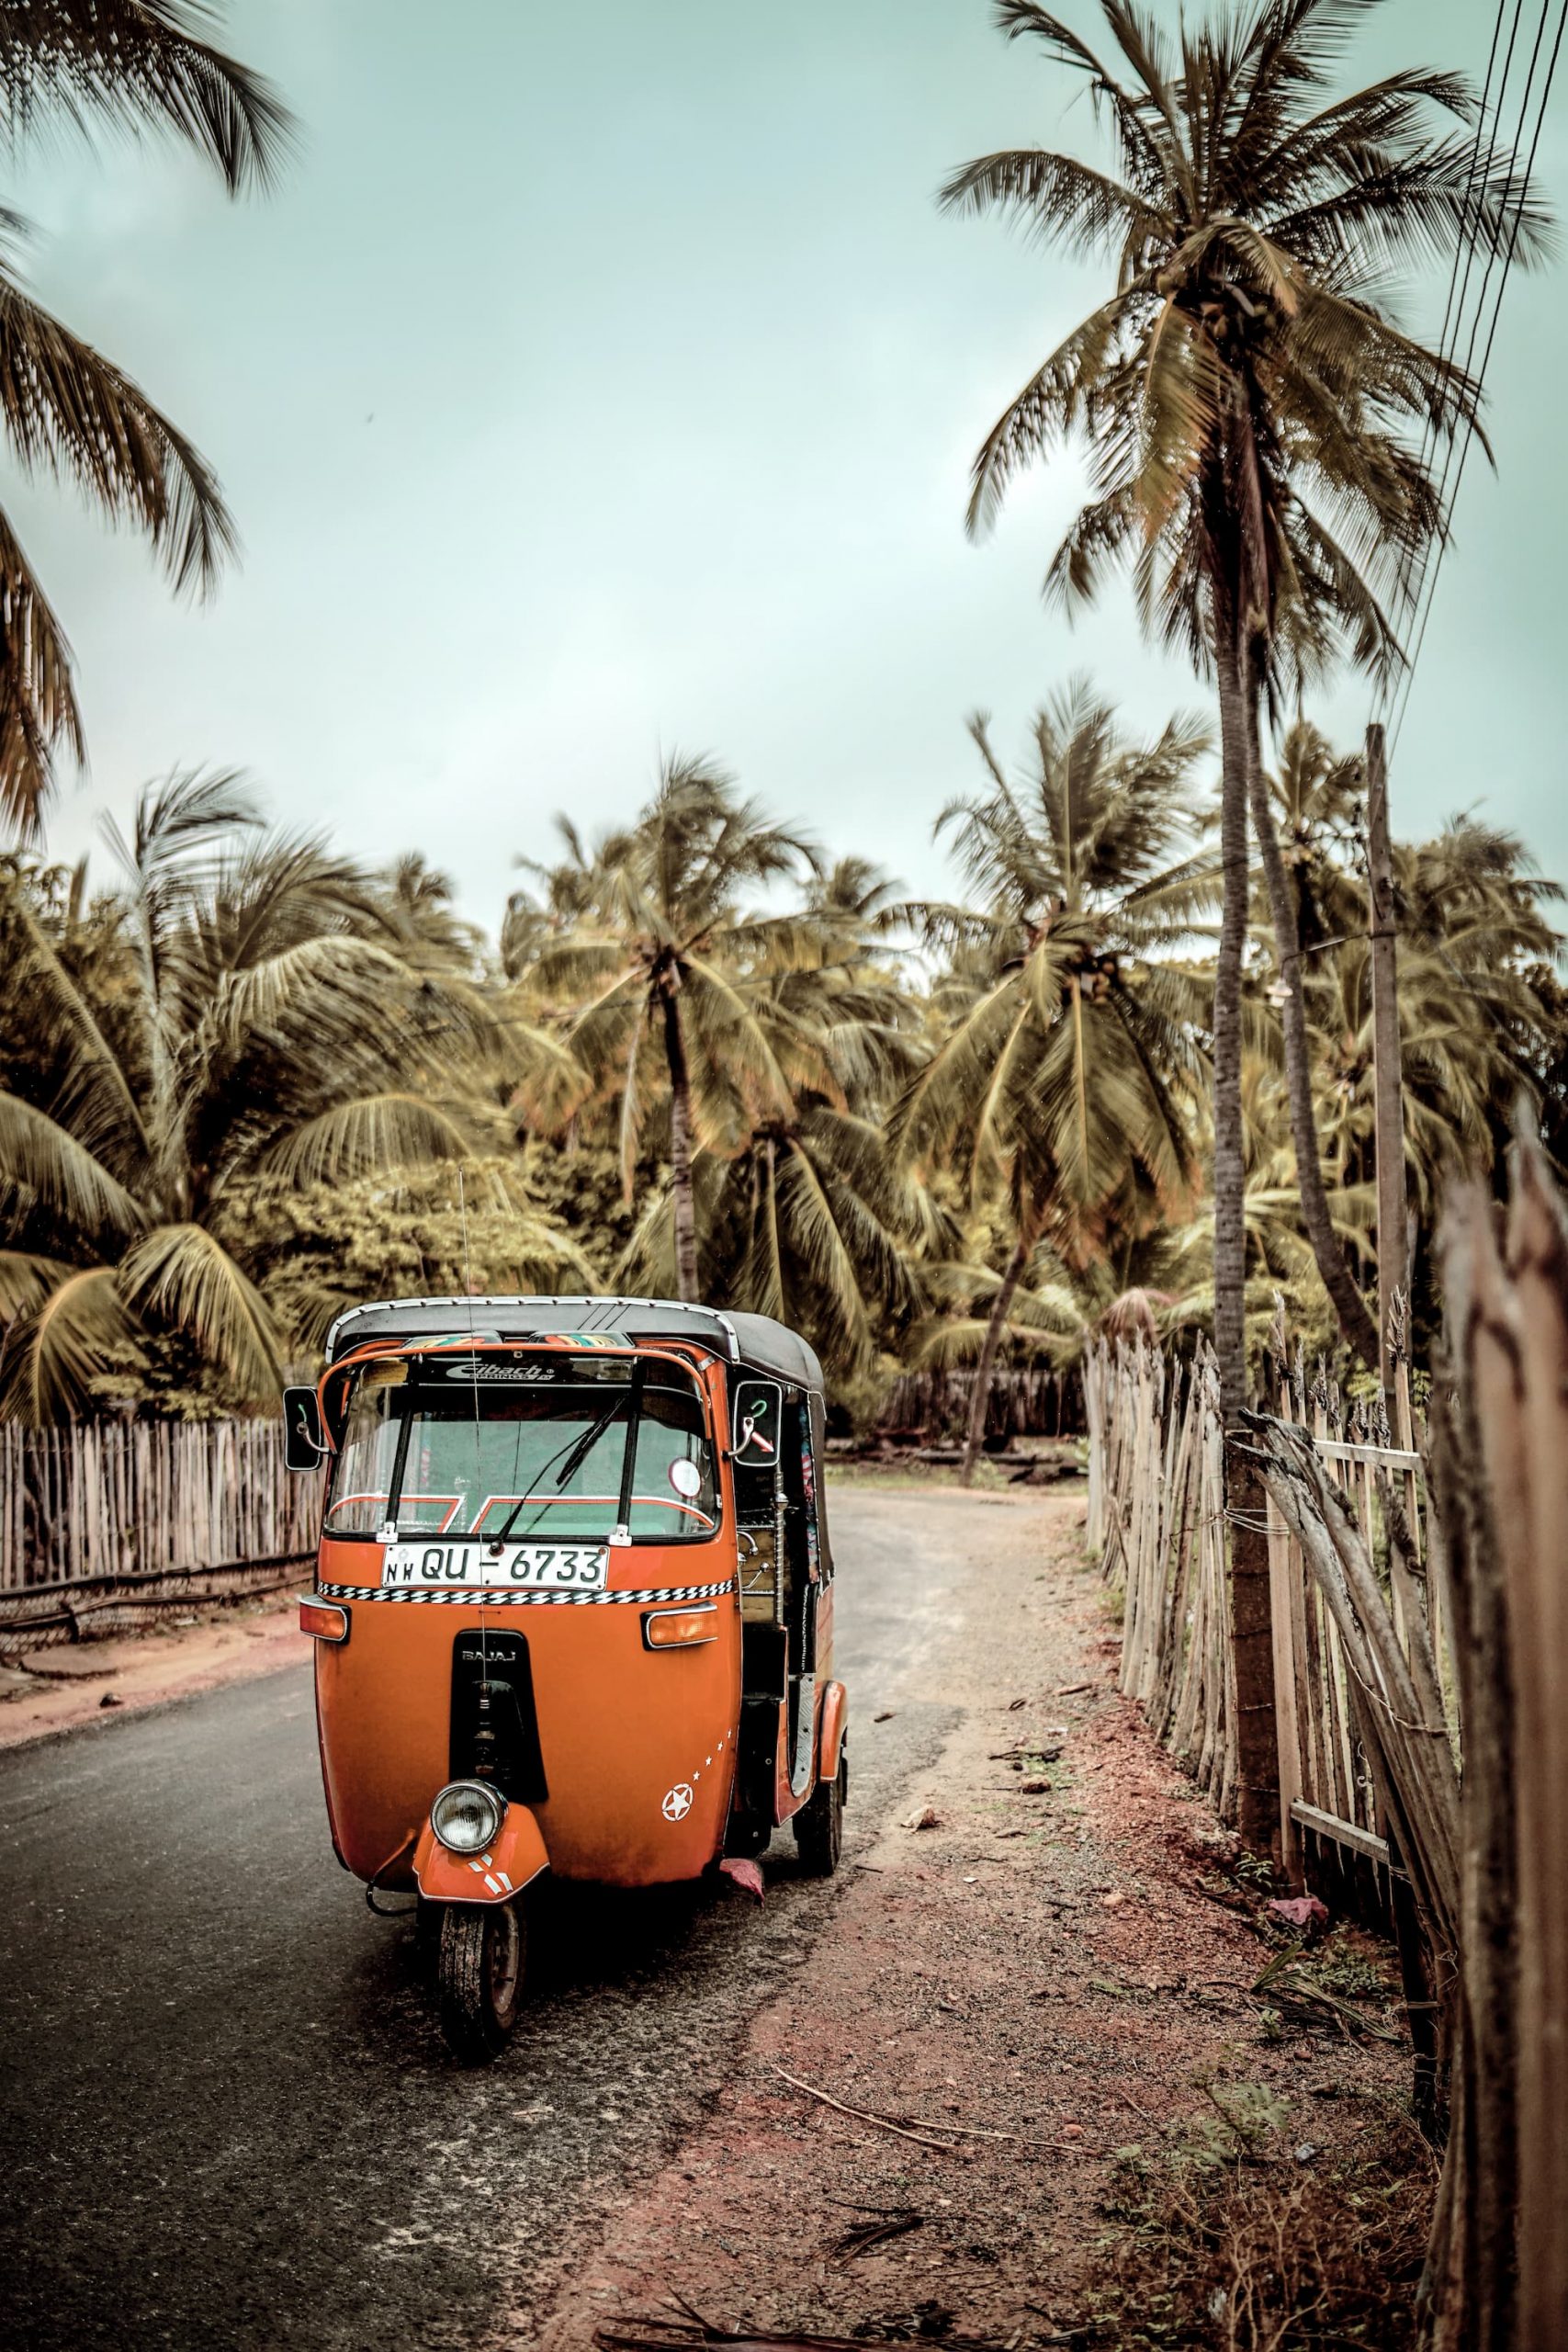 a tuk tuk is the easy way to get around Sri Lanka